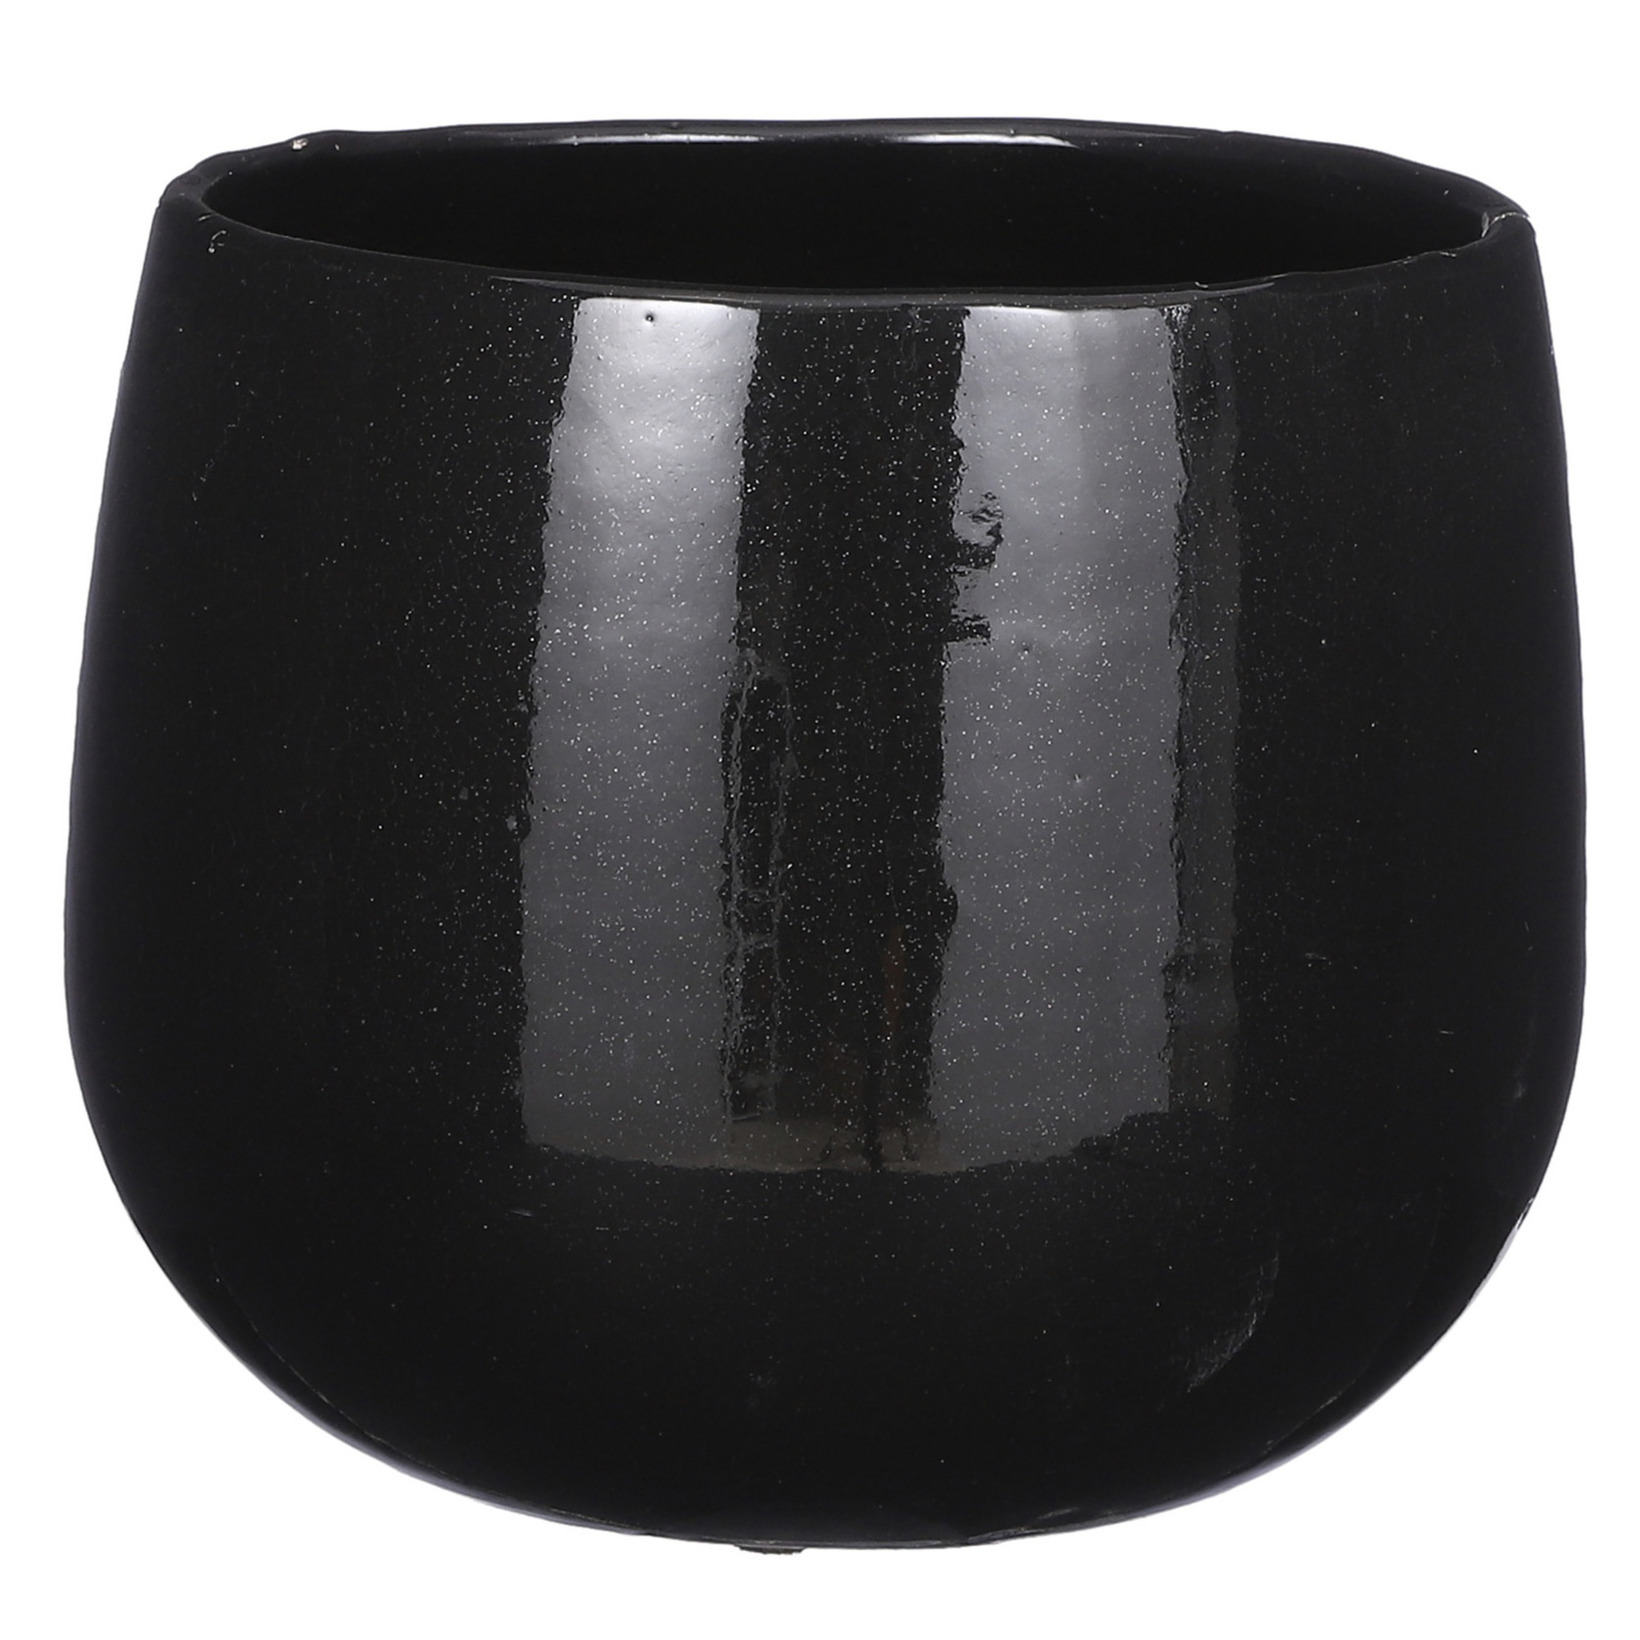 Plantenpot-bloempot keramiek zwart speels licht gevlekt patroon D18-H16 cm